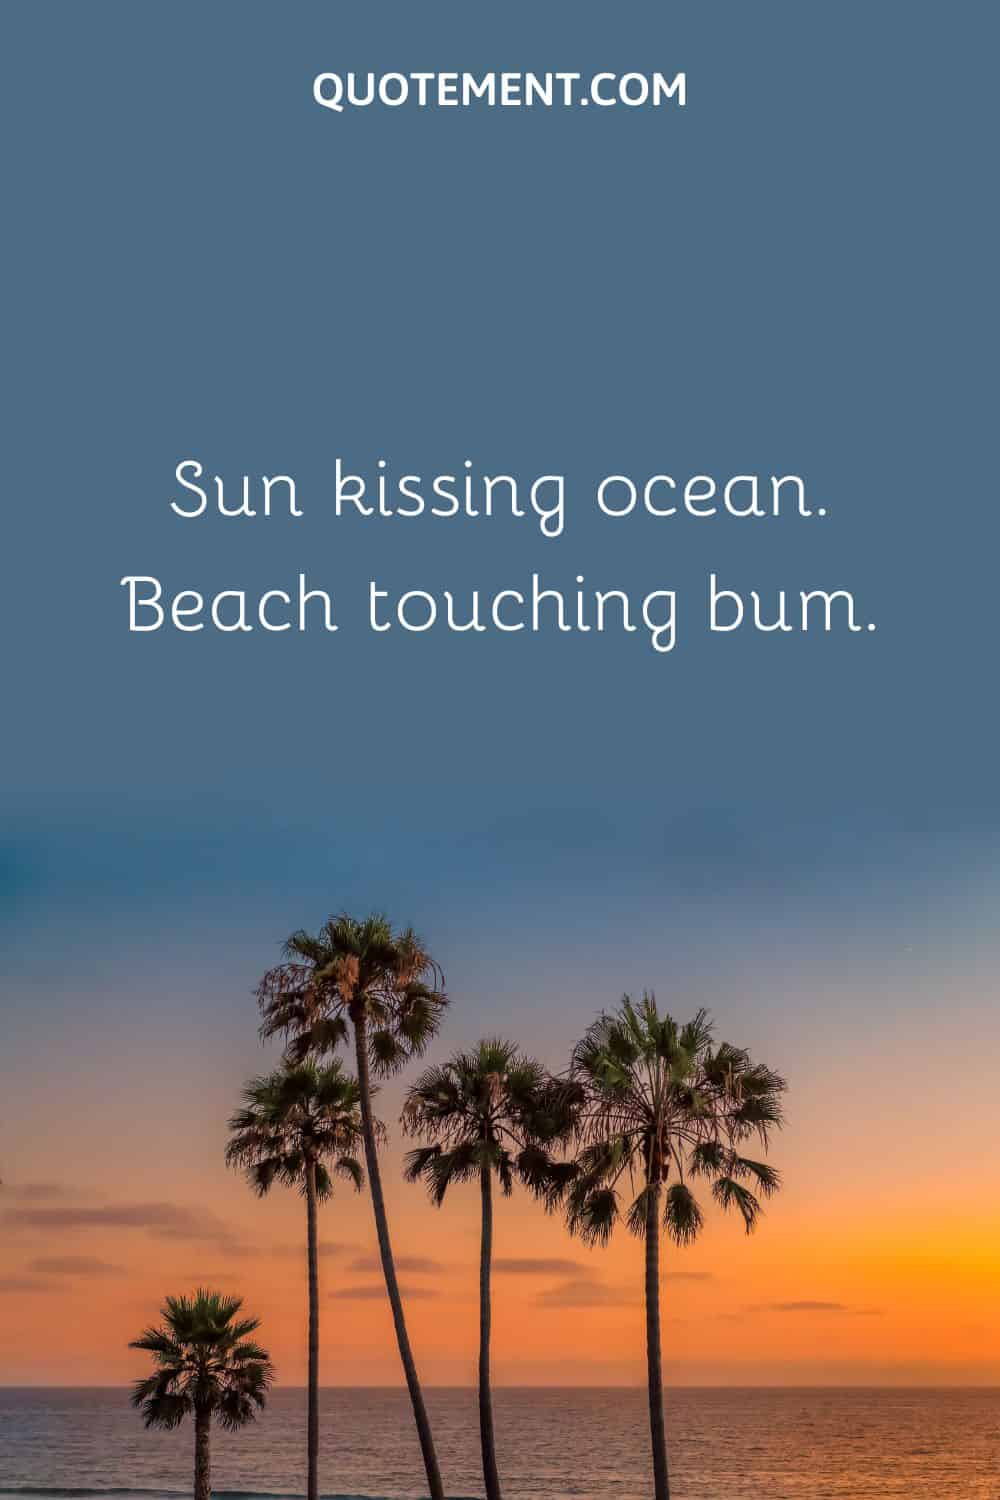 Sun kissing ocean. Beach touching bum